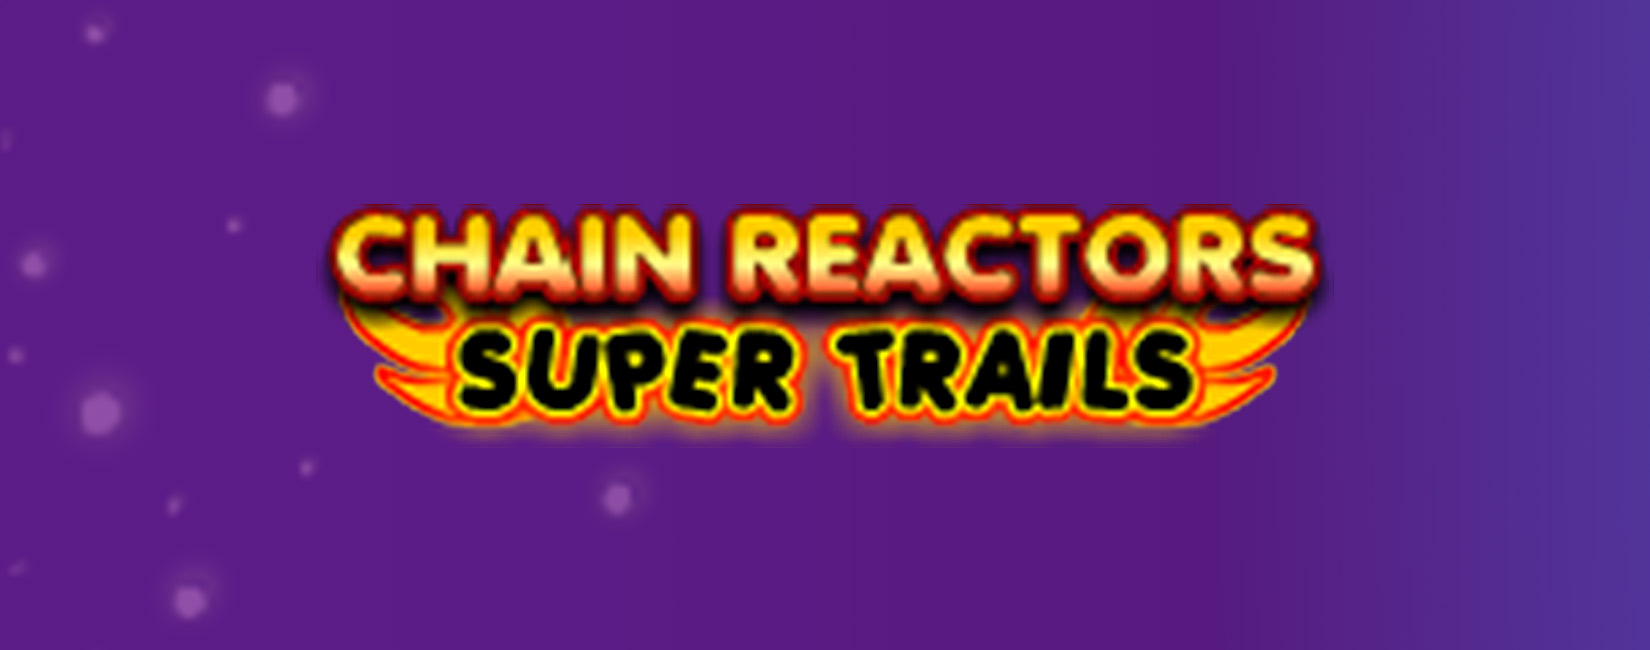 CRE-292760-February reviews-Chain Reactors super trails slot-GC-promo-name-sitecore-1650x650